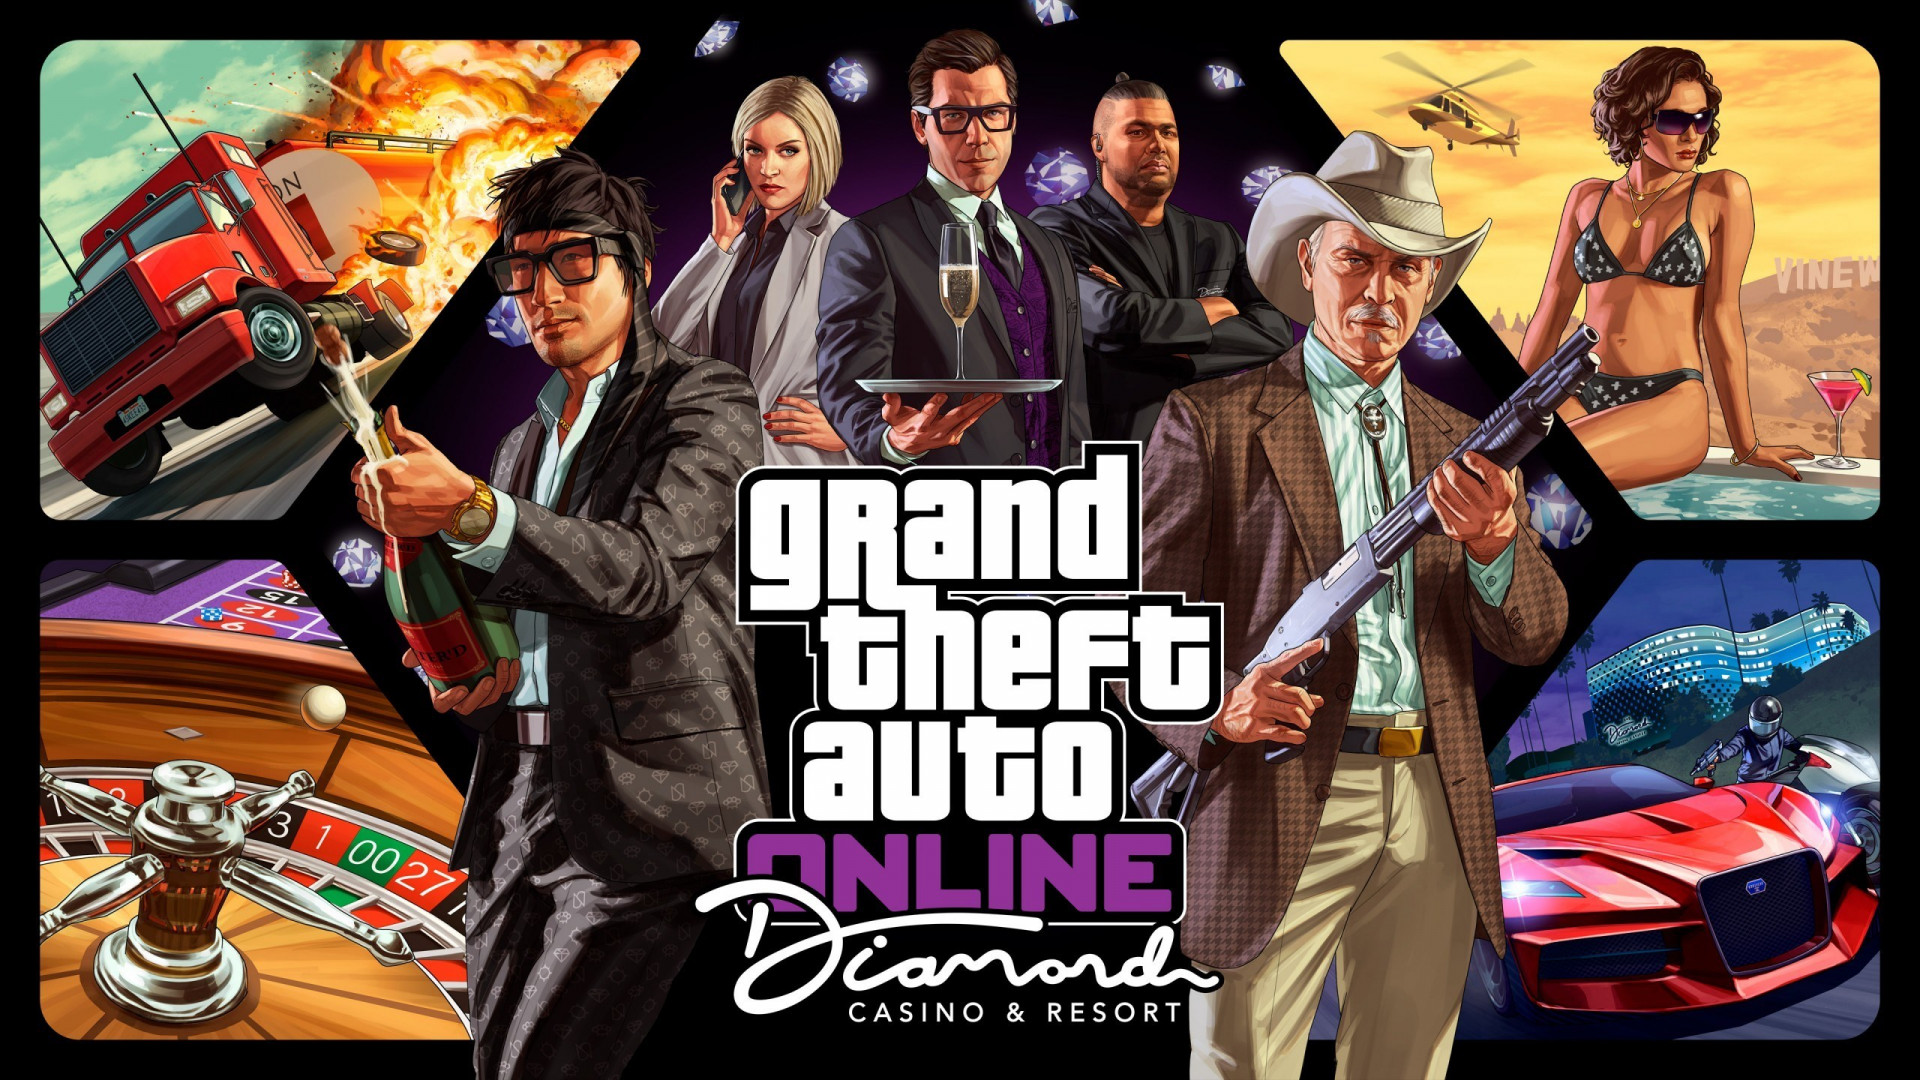 Download wallpaper: GTA Online Diamond Casino Resort 1920x1080